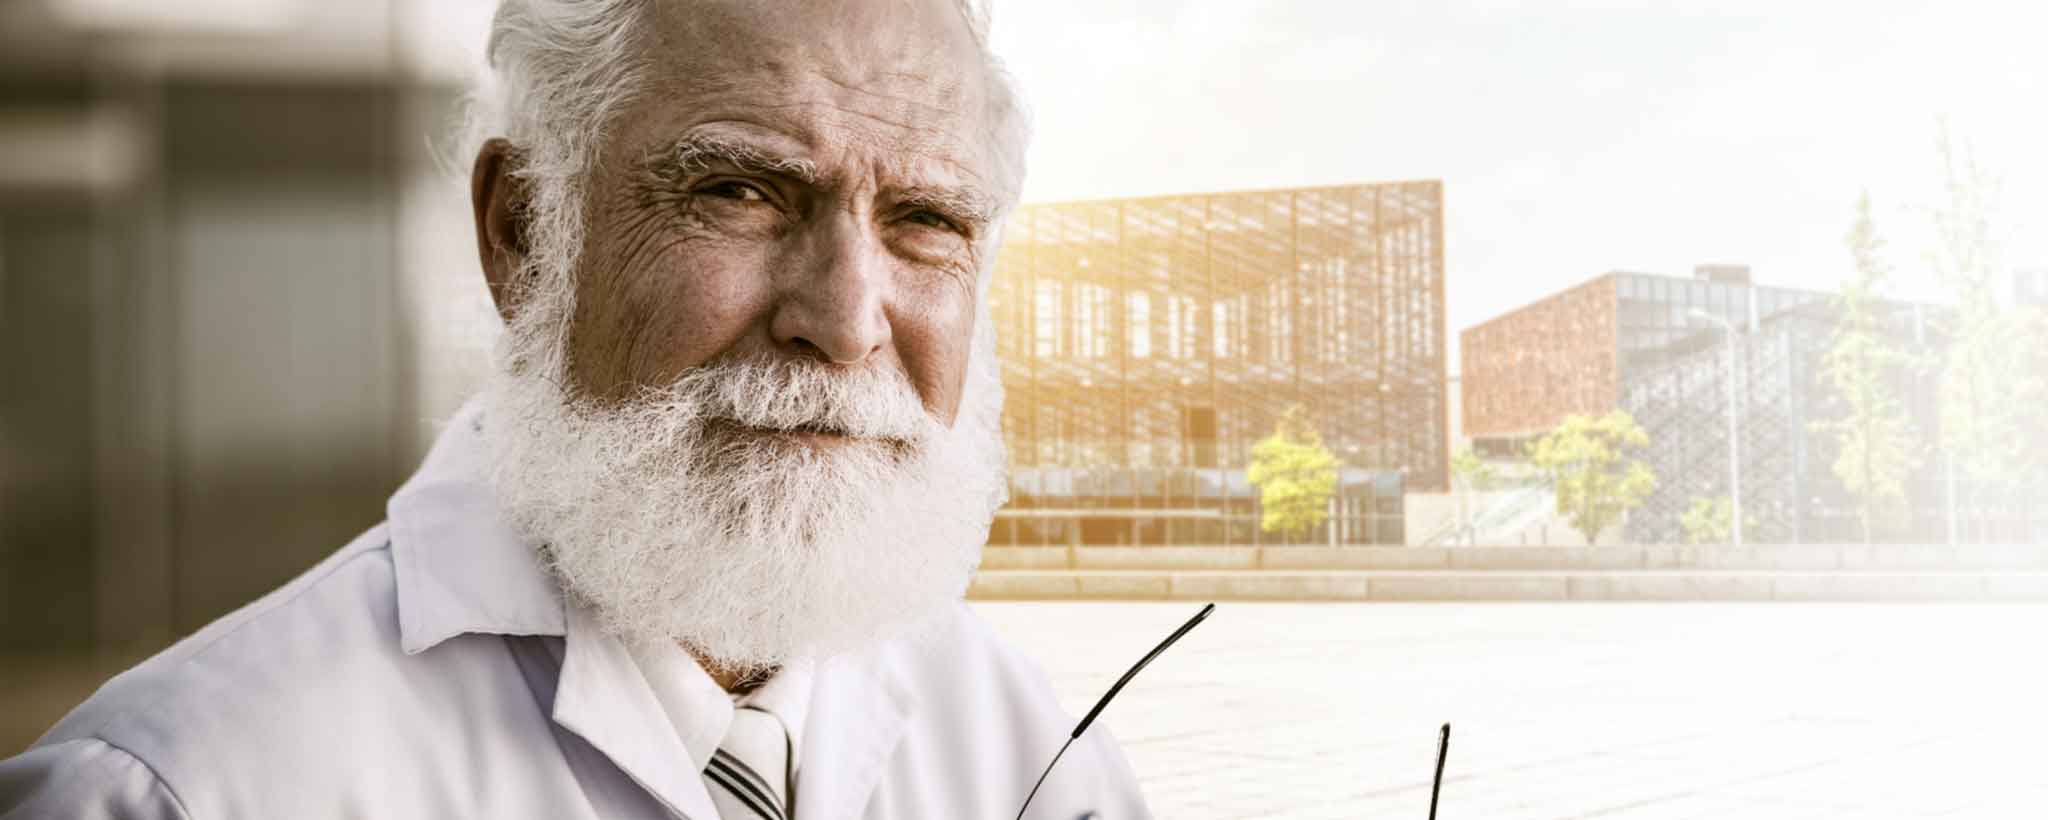 'Elderly man viewing building plans'